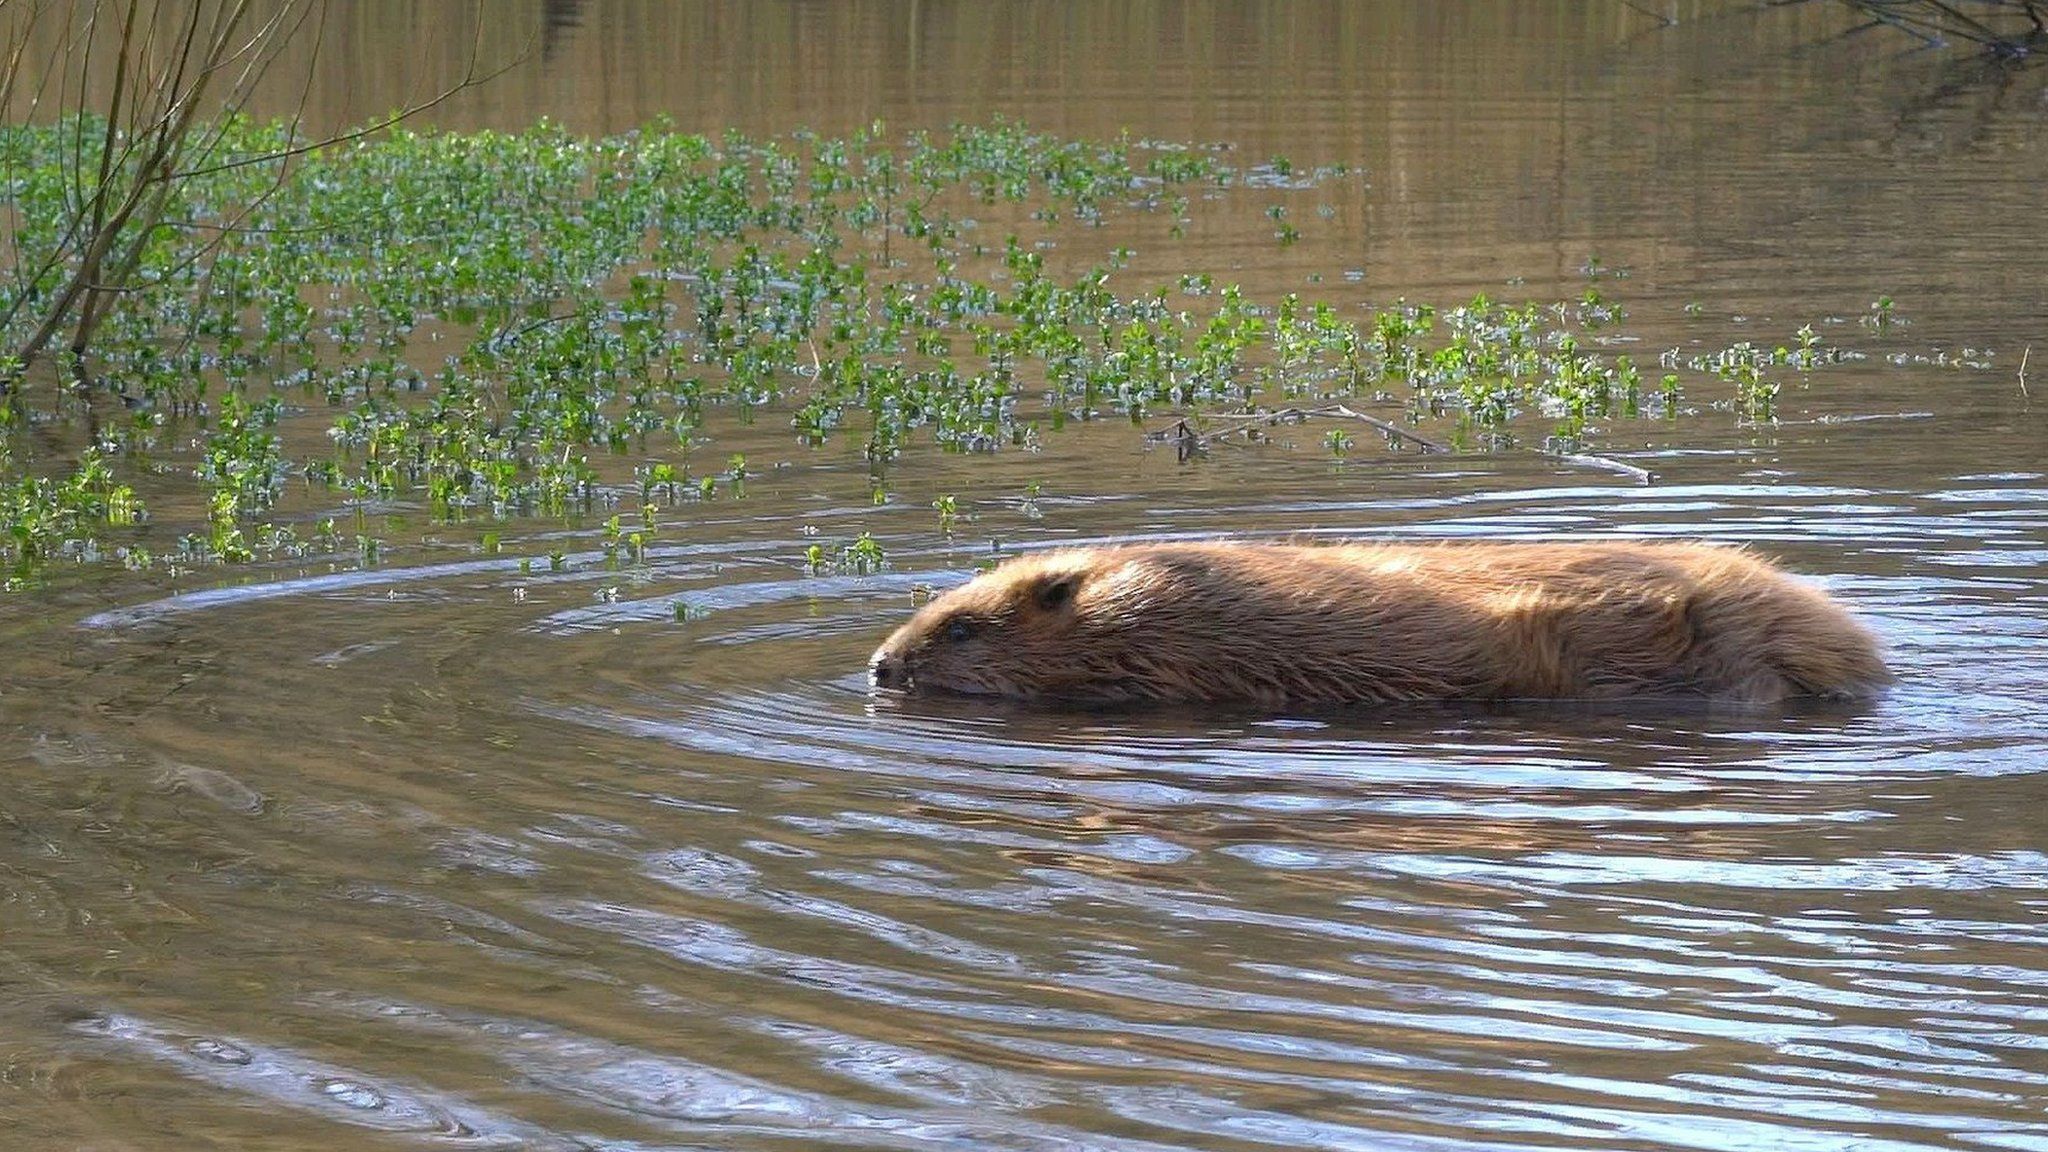 Beaver in water